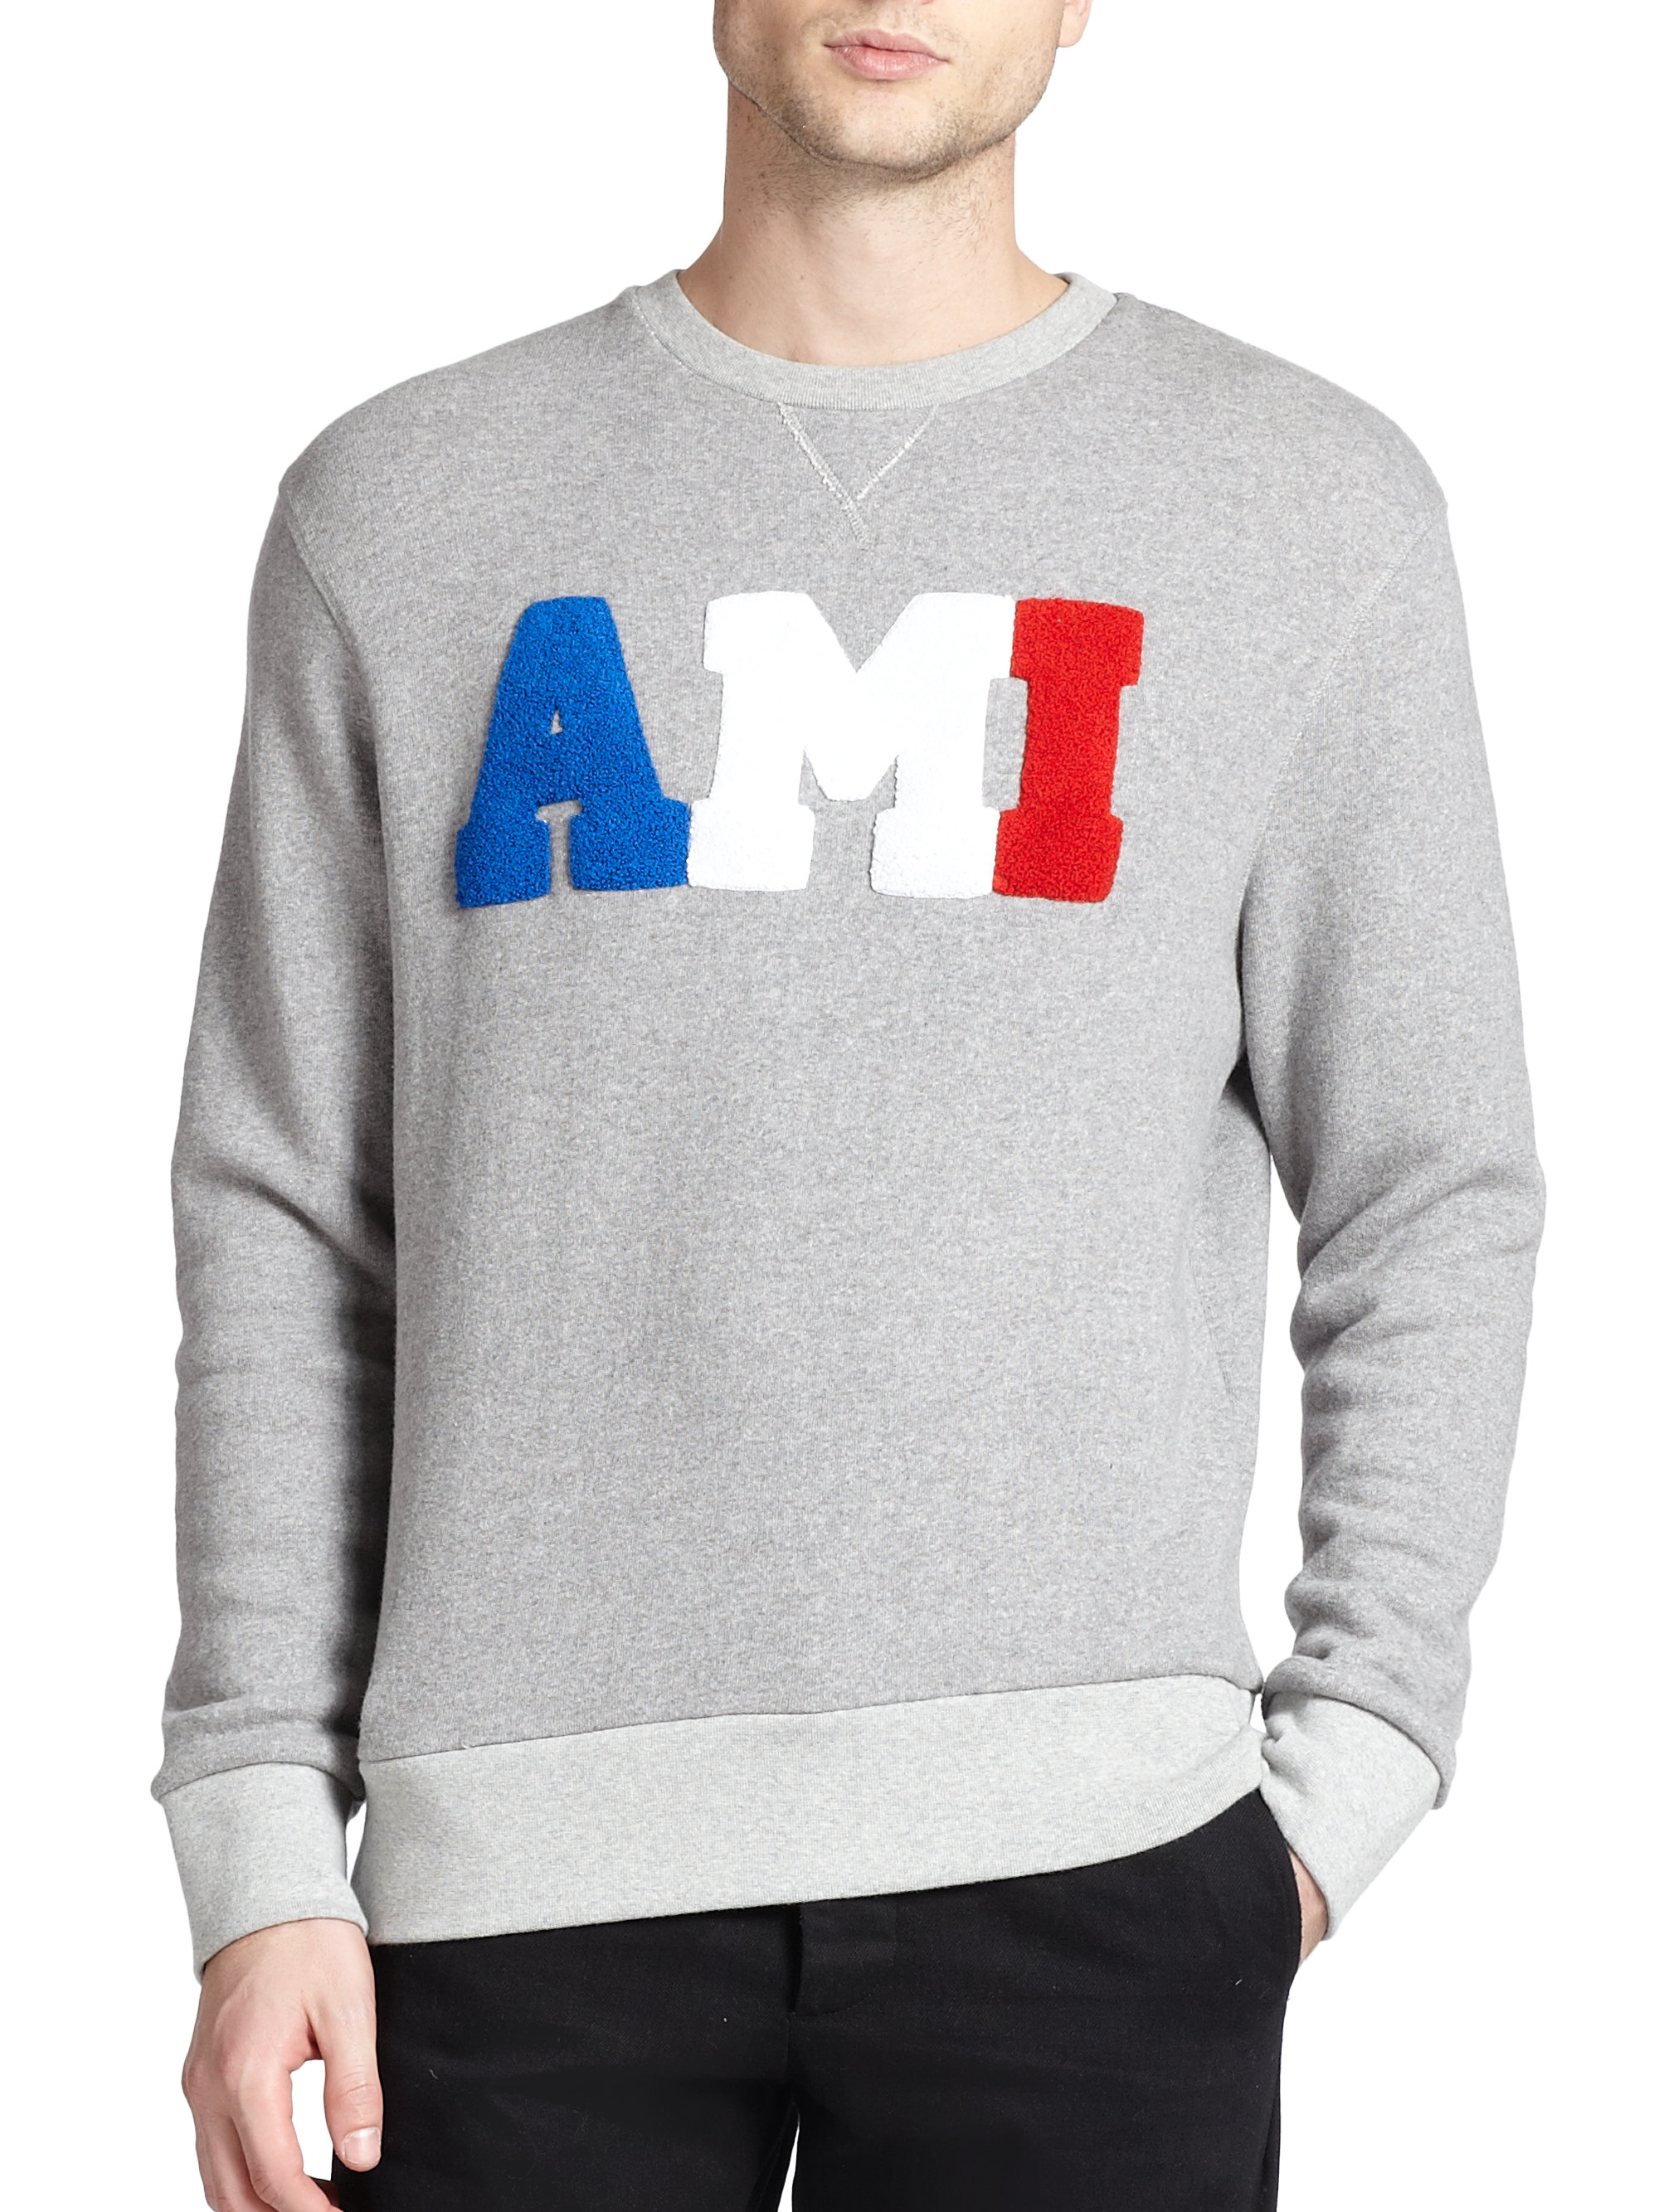 Lyst - Ami Logo Sweatshirt in Gray for Men